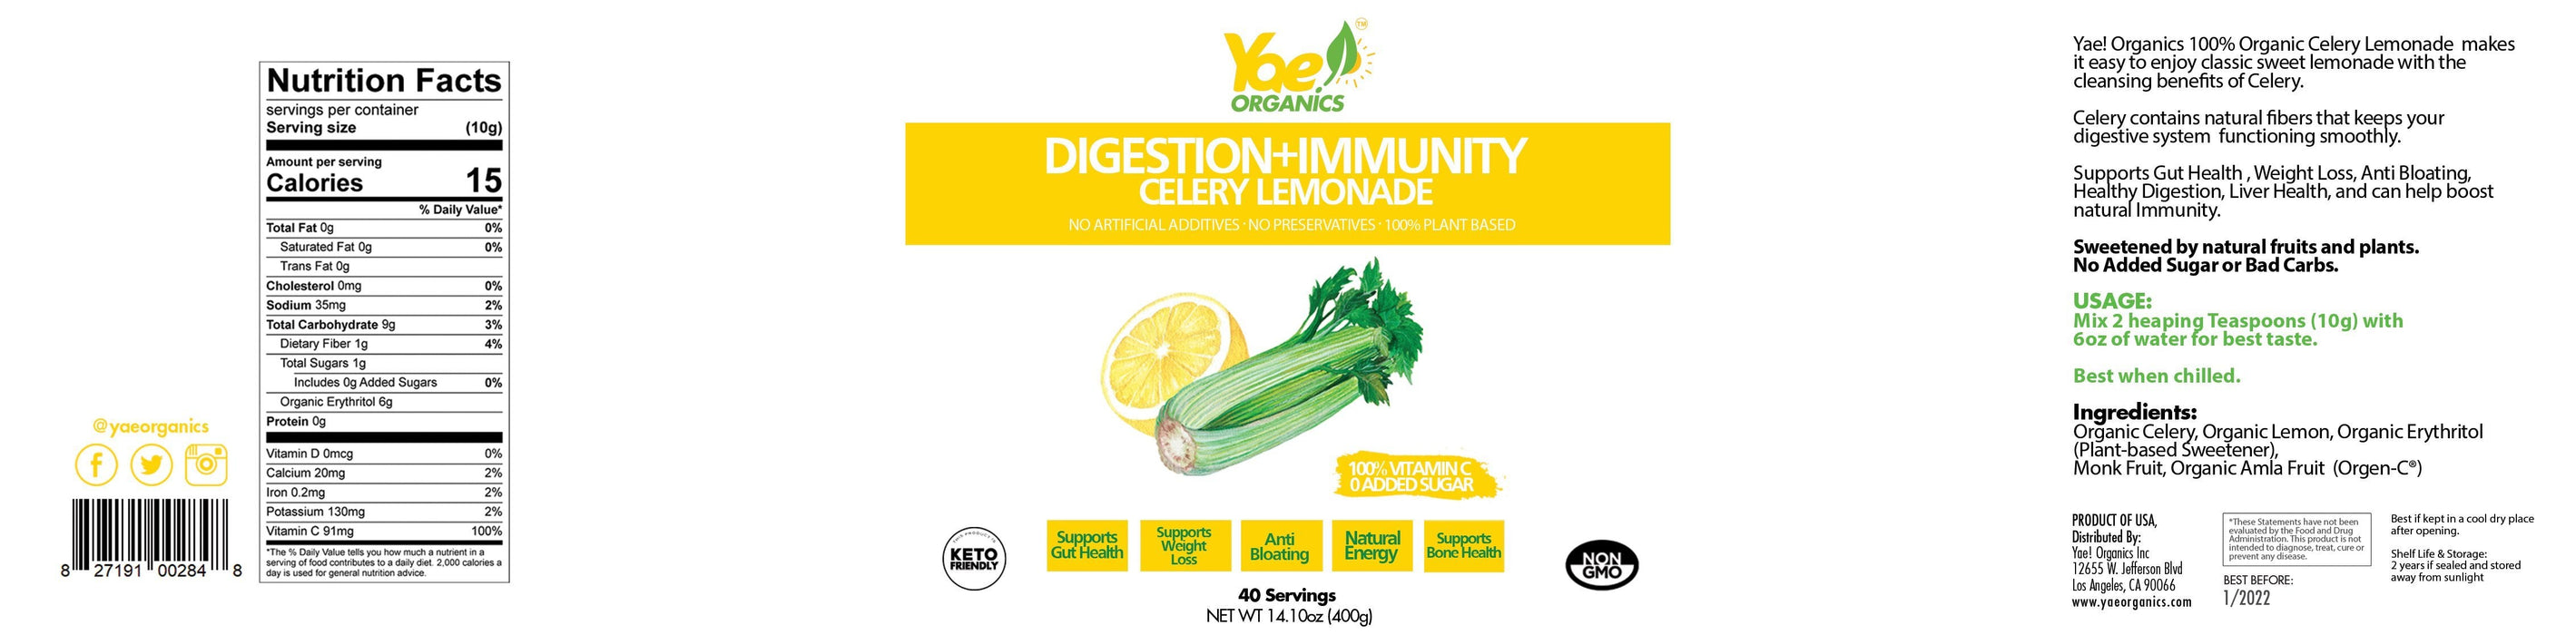 Digestion+Immunity-Organic Celery Lemonade